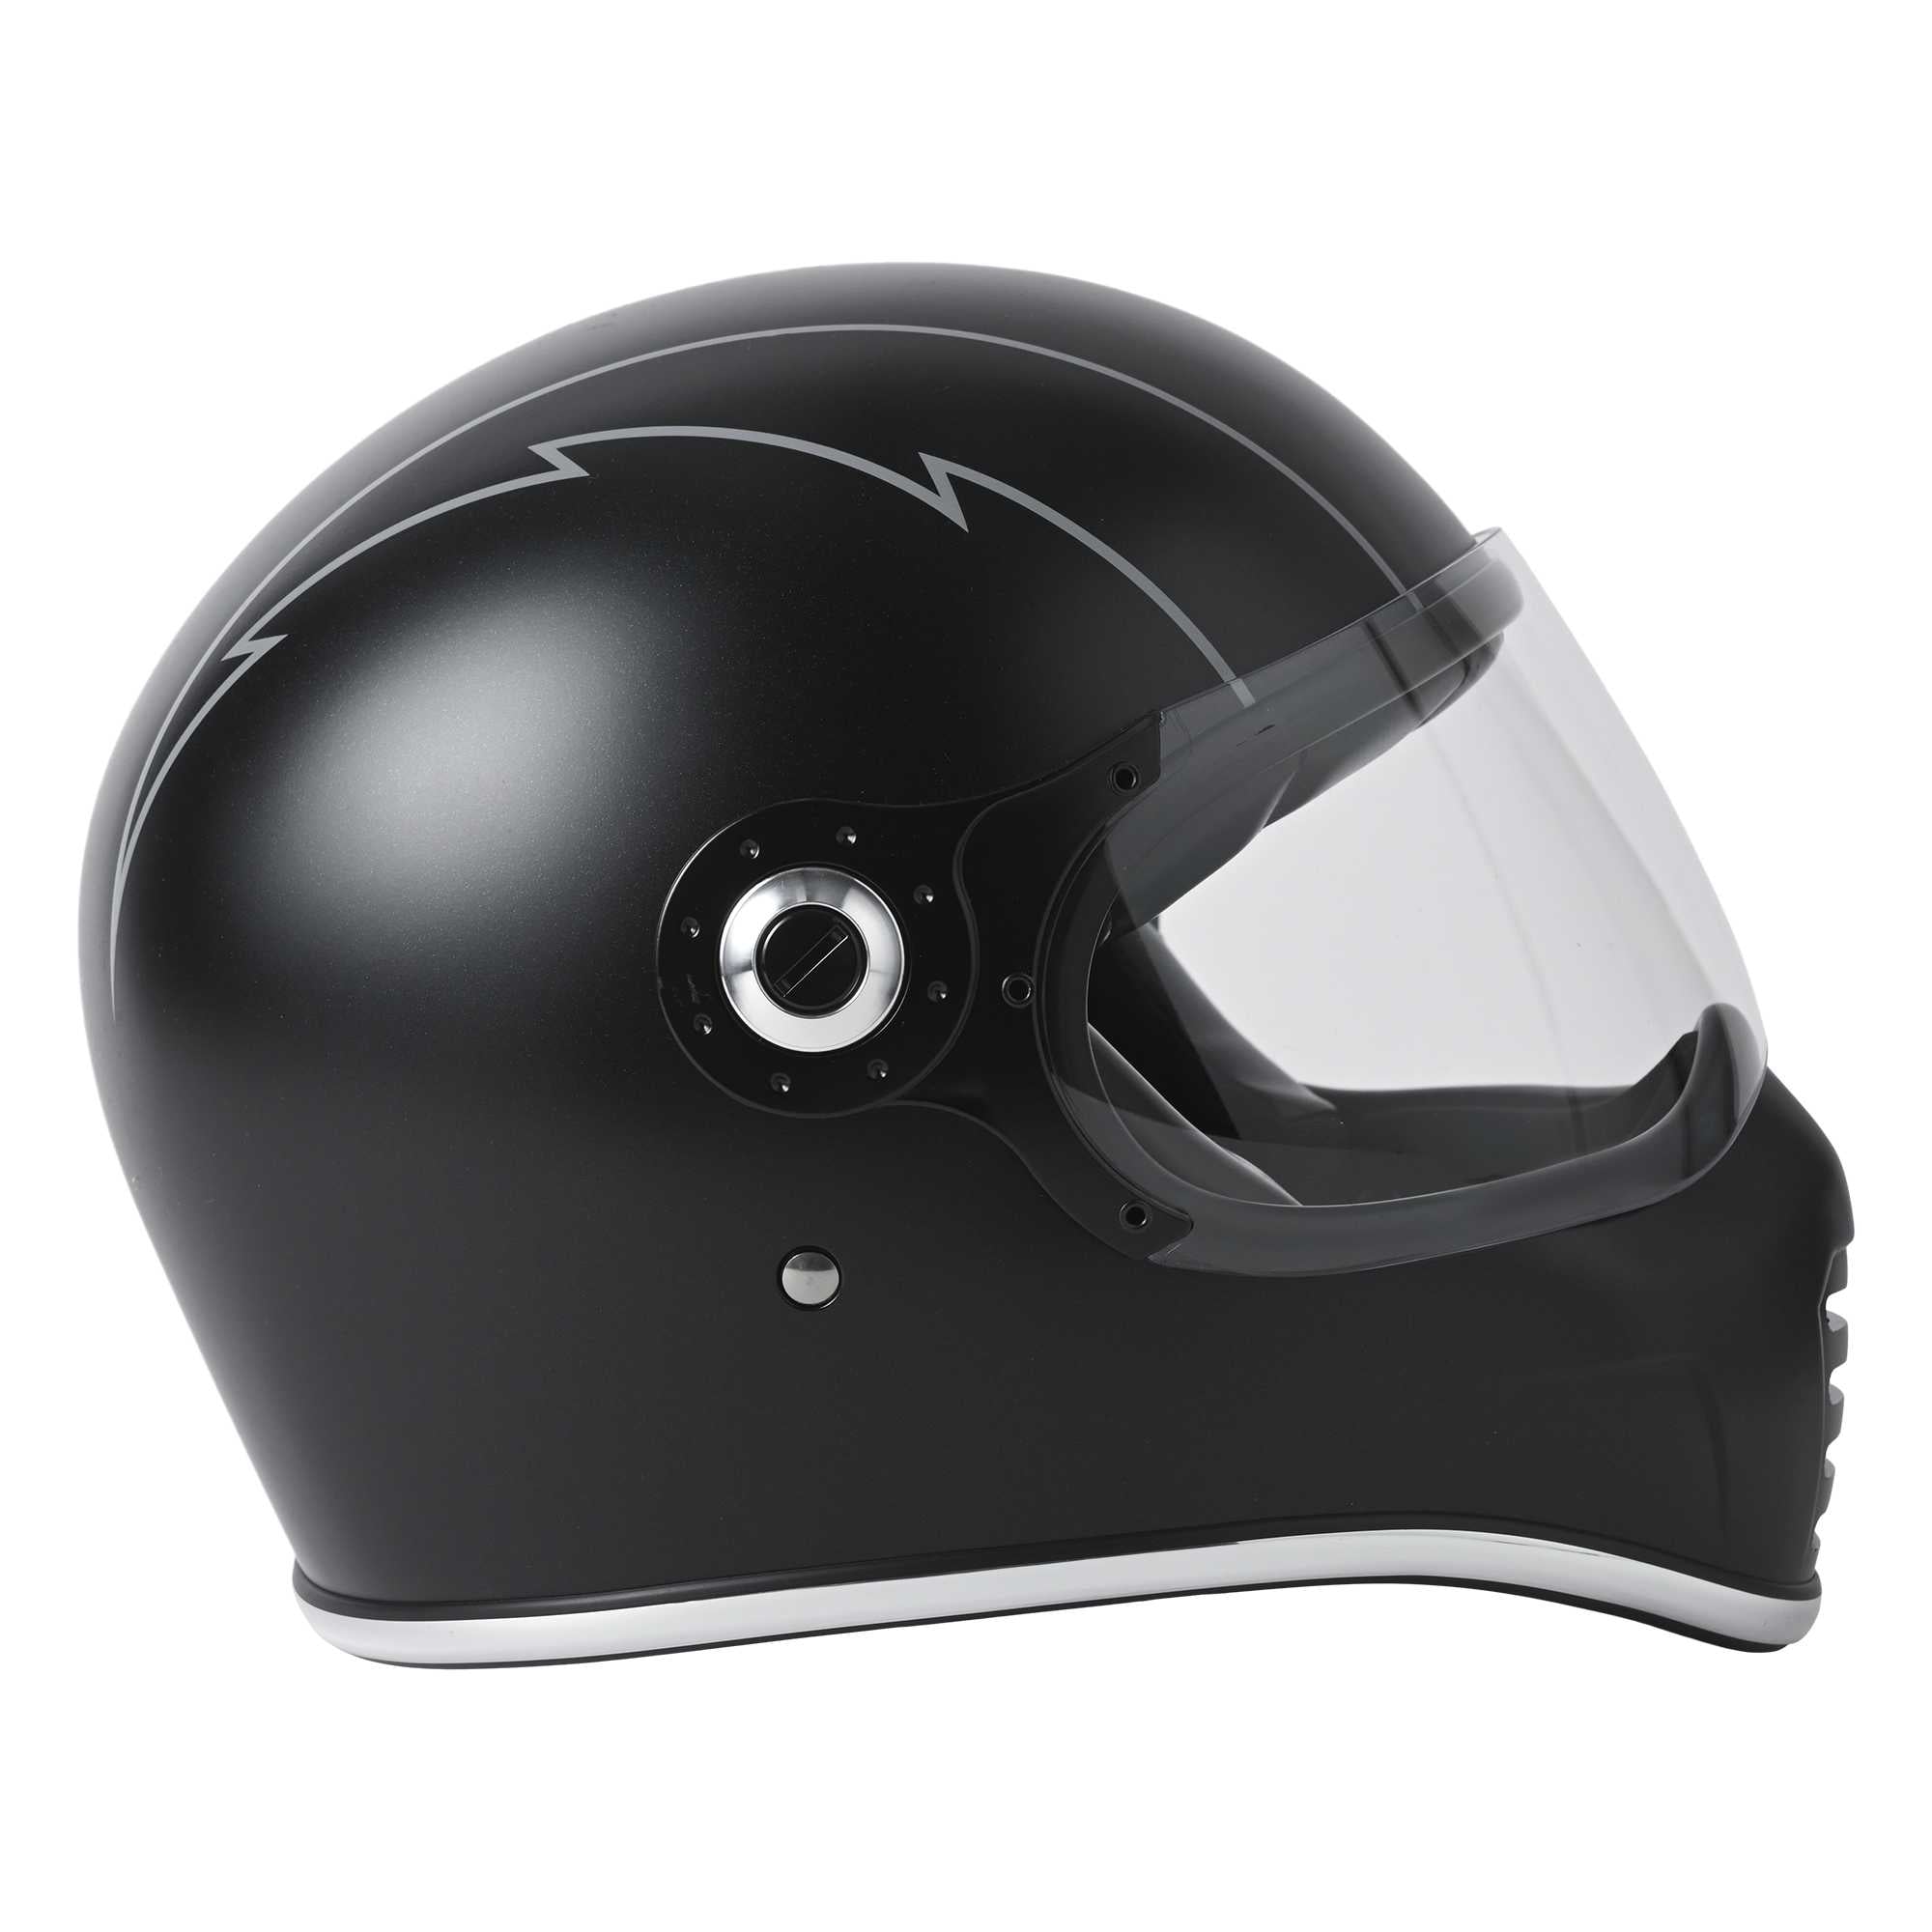 RIDEZ XX HELMET Limited Quantity Model THUNDER BOLT Full Face Motorcycle Helmet 